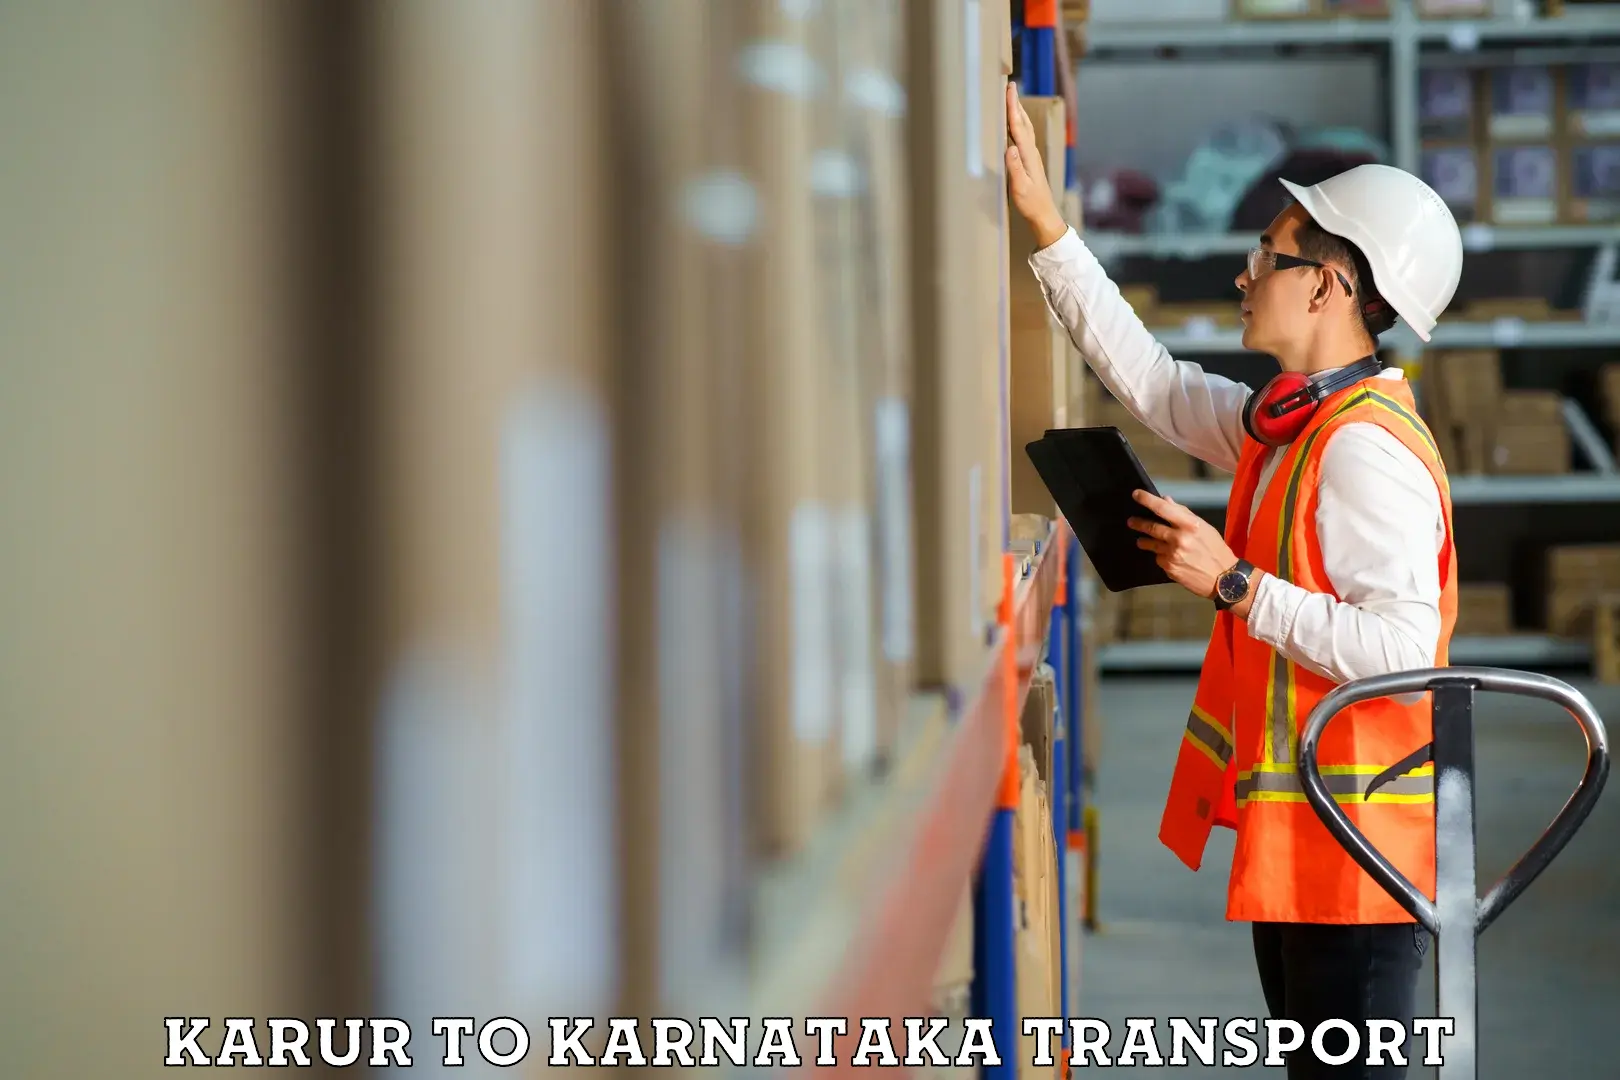 Transport bike from one state to another Karur to Karnataka